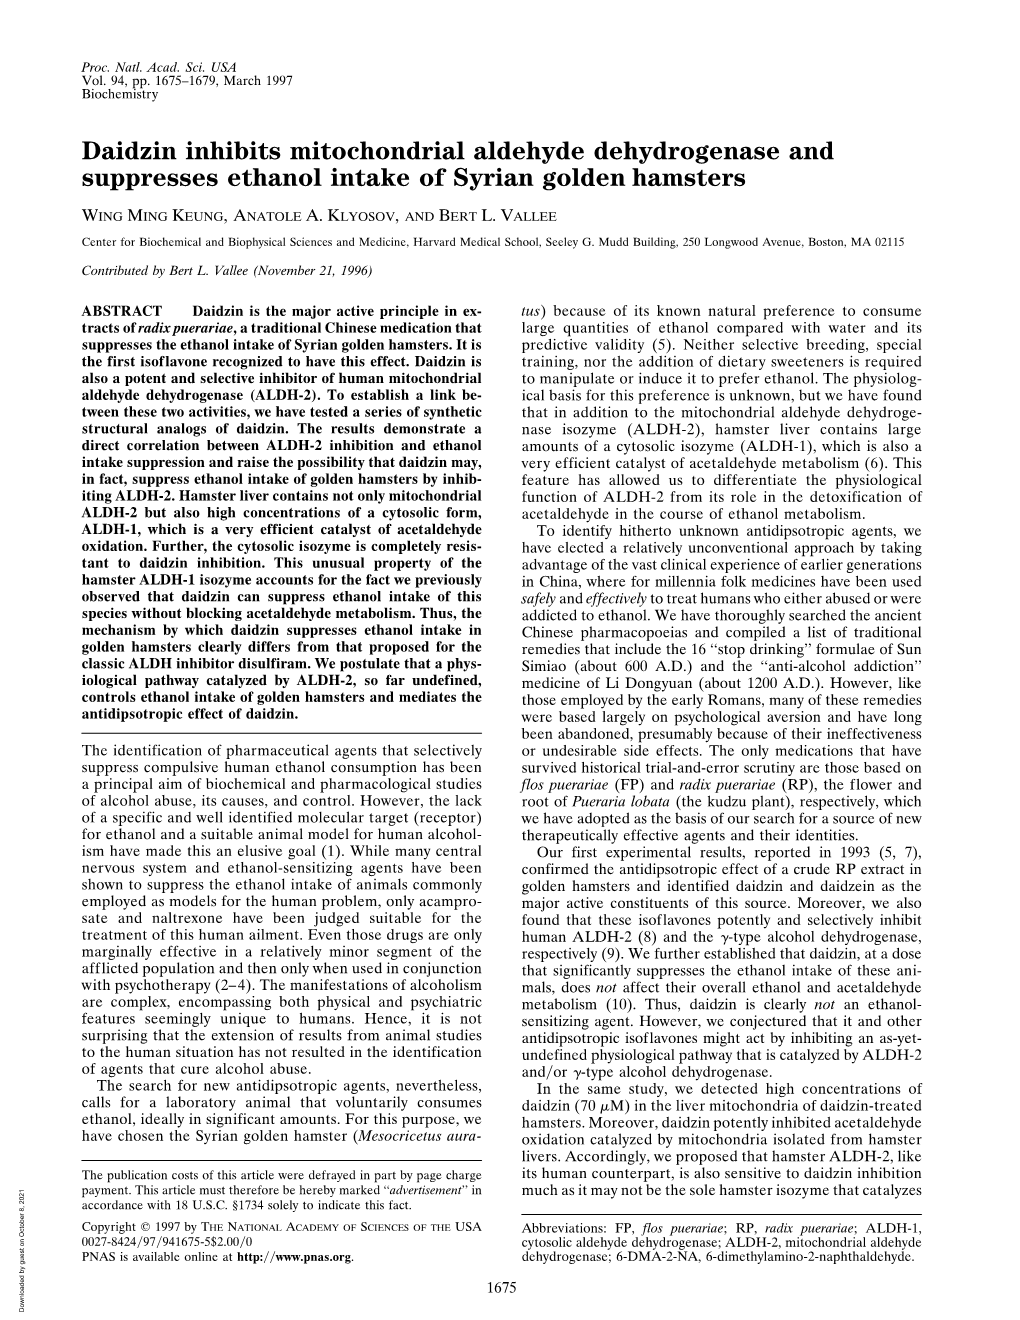 Daidzin Inhibits Mitochondrial Aldehyde Dehydrogenase and Suppresses Ethanol Intake of Syrian Golden Hamsters